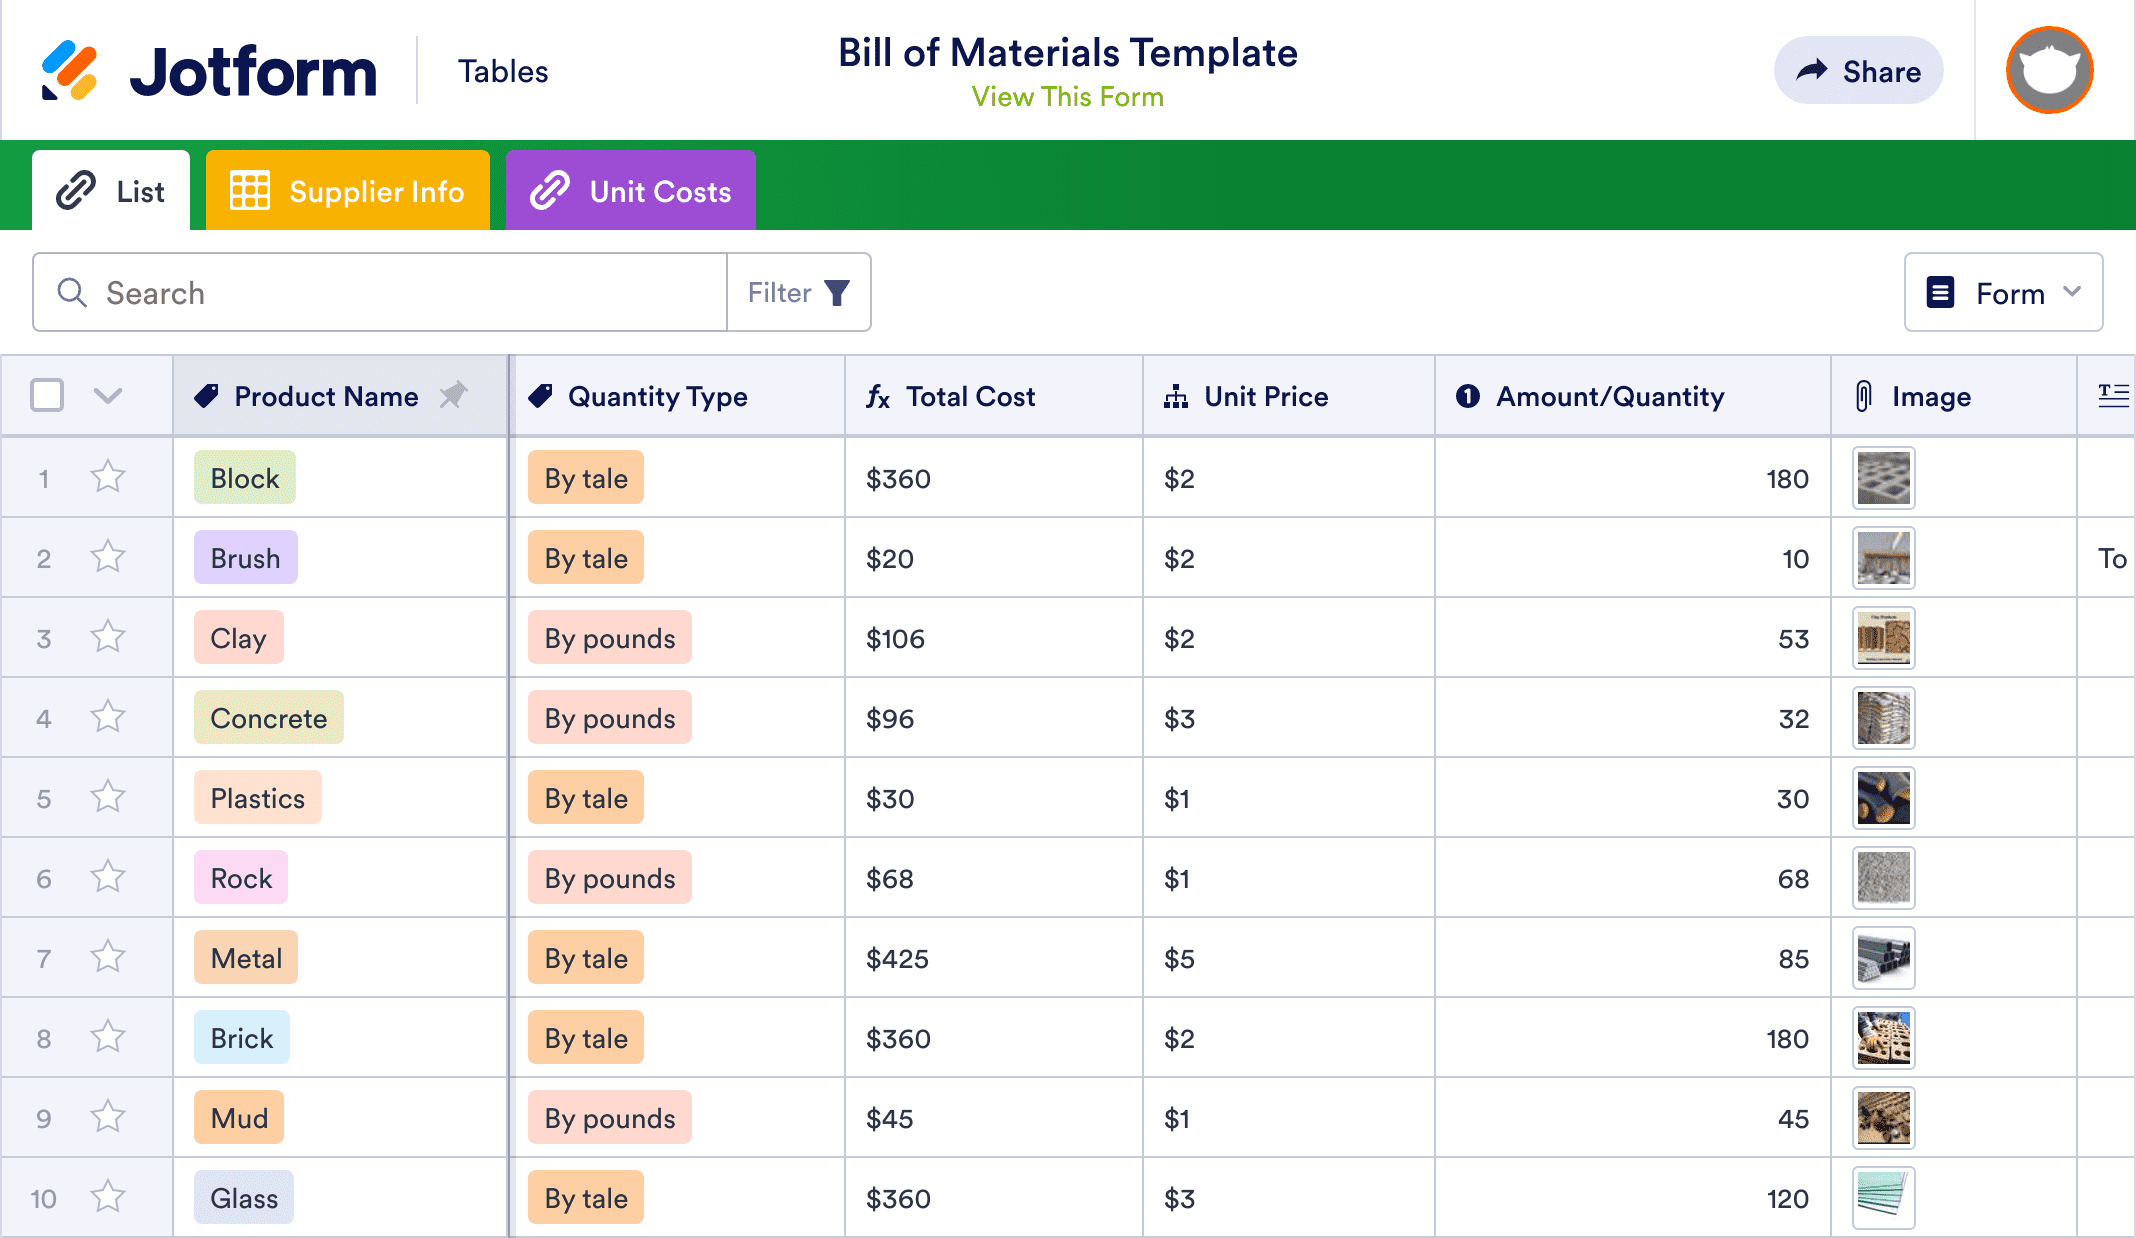 Bill of Materials Template